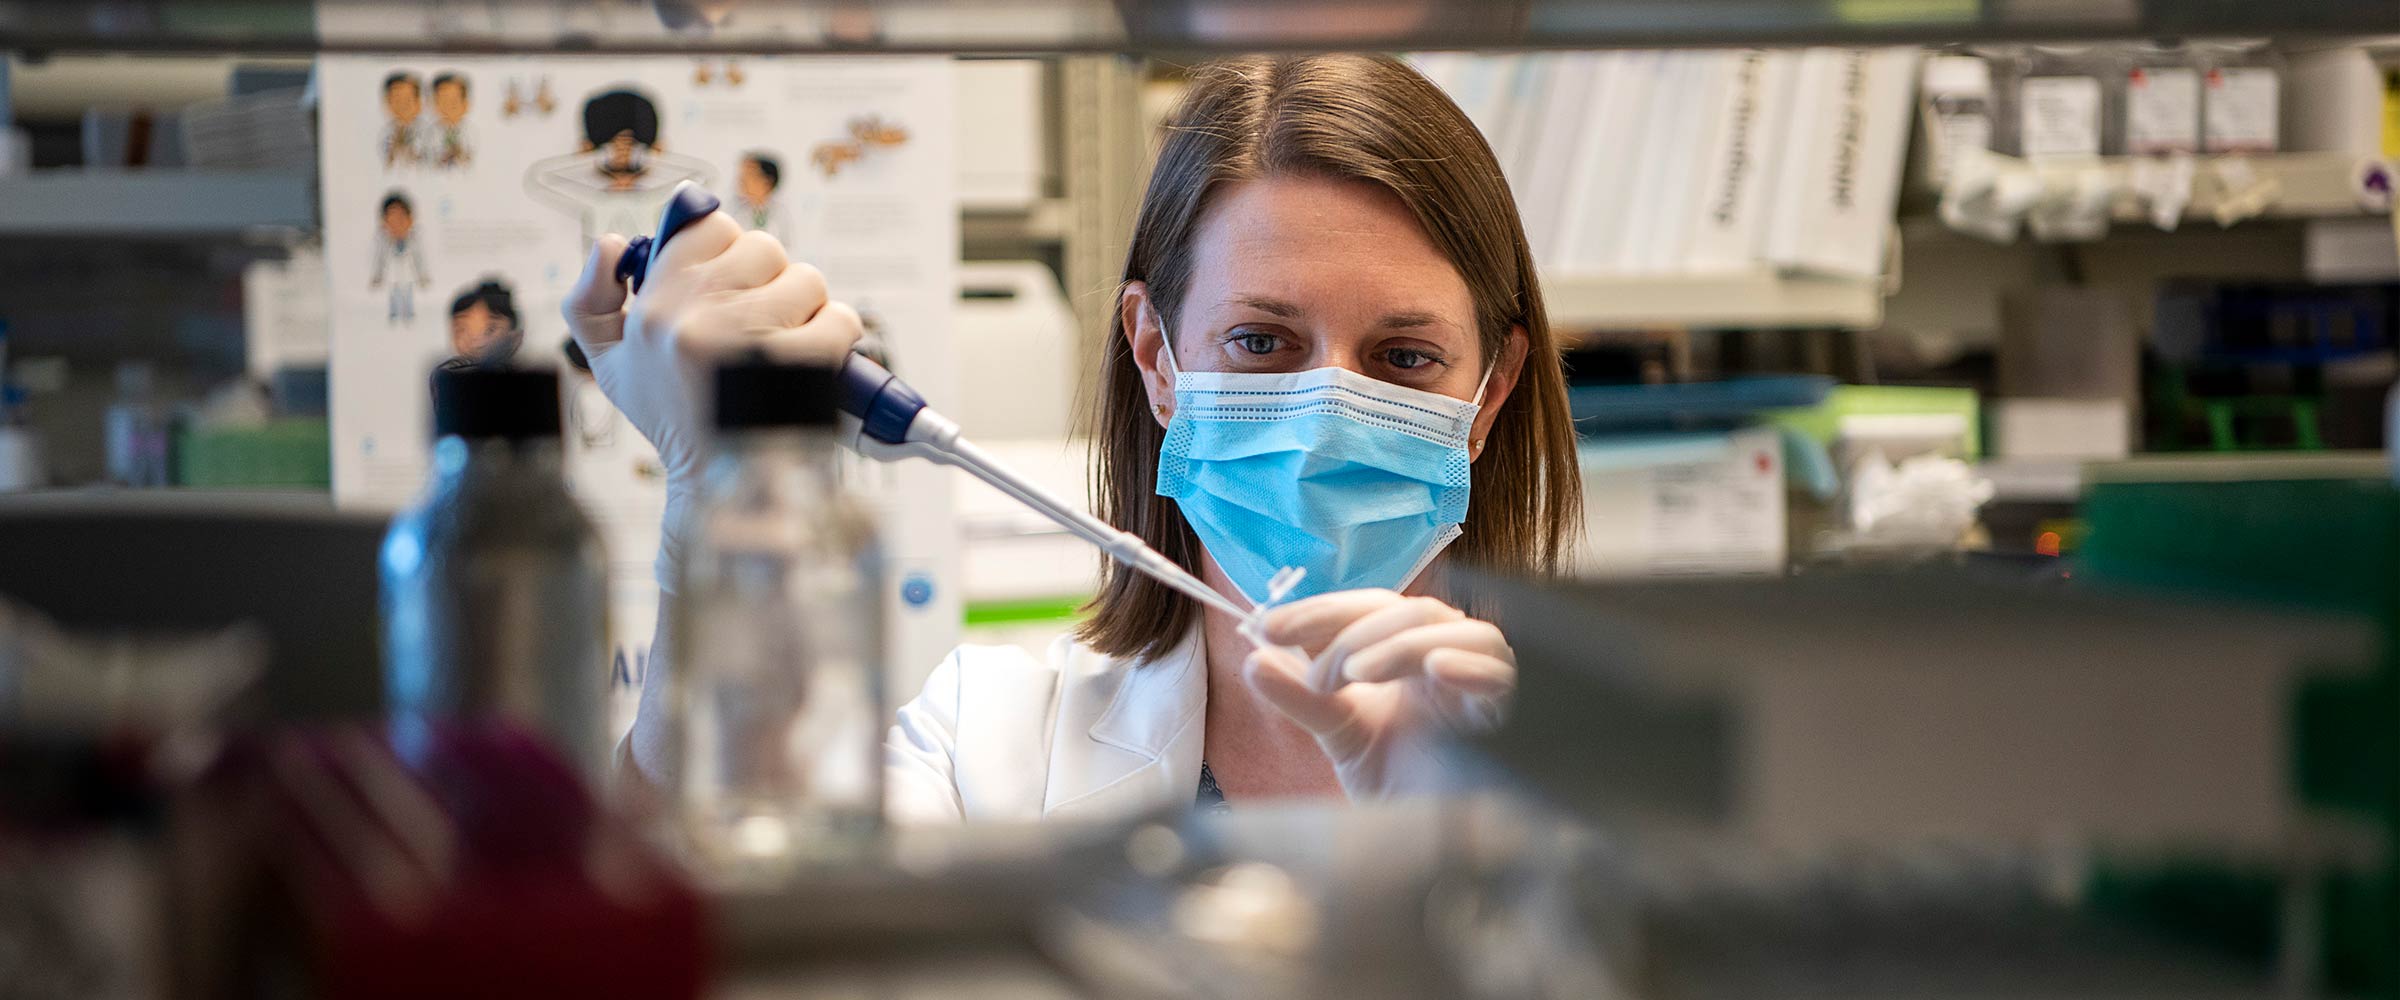 Jennifer Woyach working in her lab